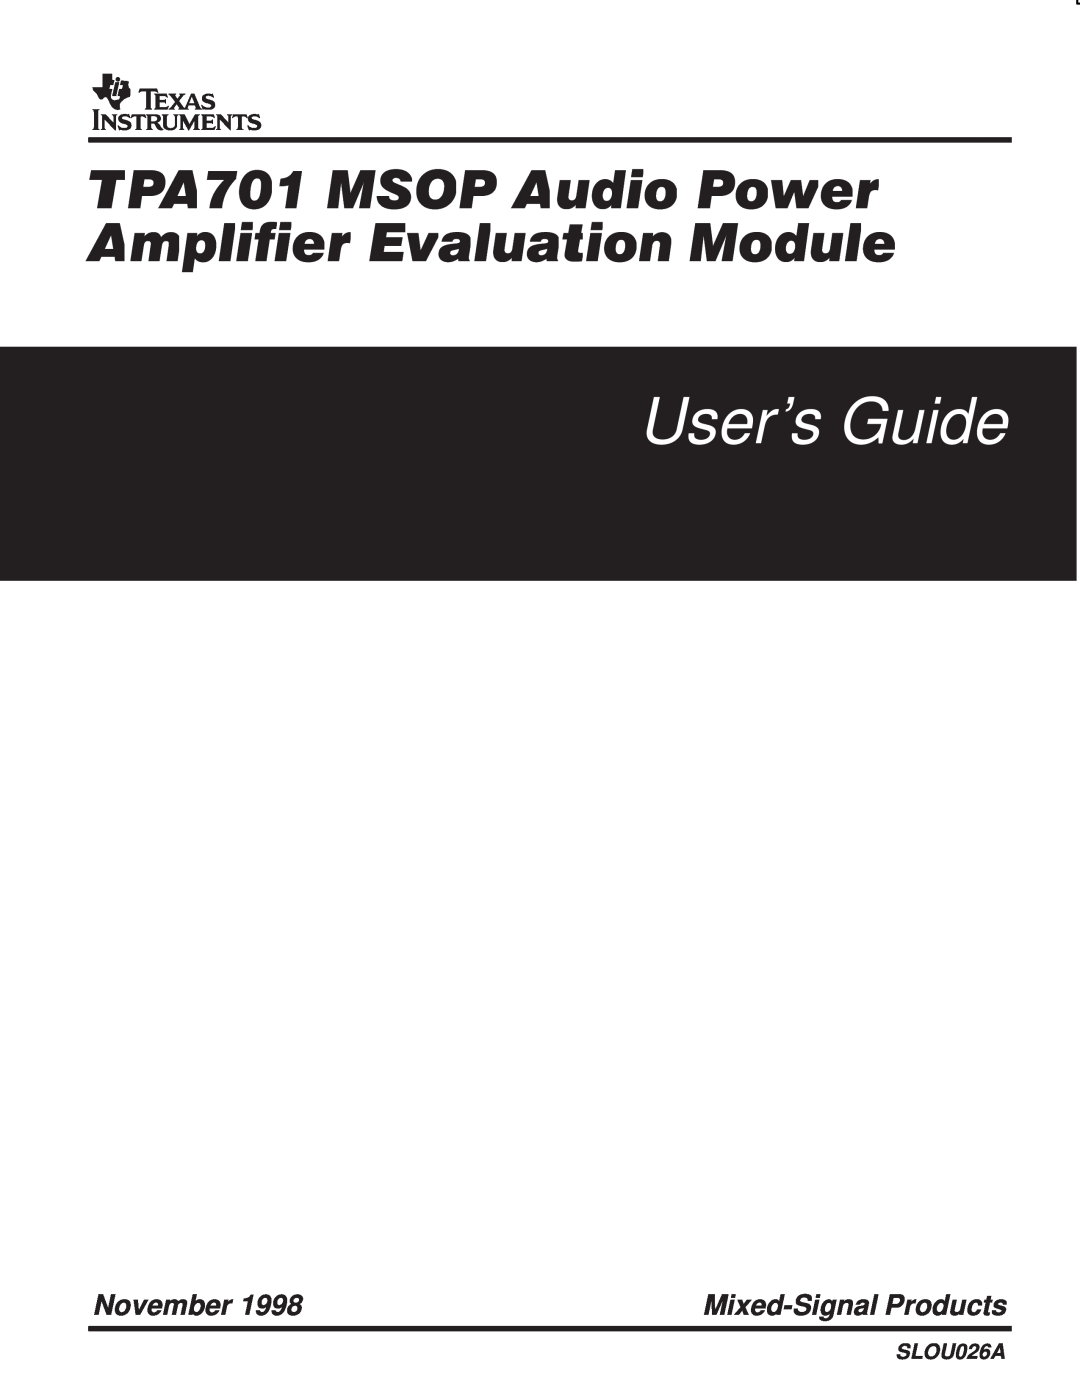 Texas Instruments TPA701 manual Users Guide, November, Mixed-SignalProducts, SLOU026A 